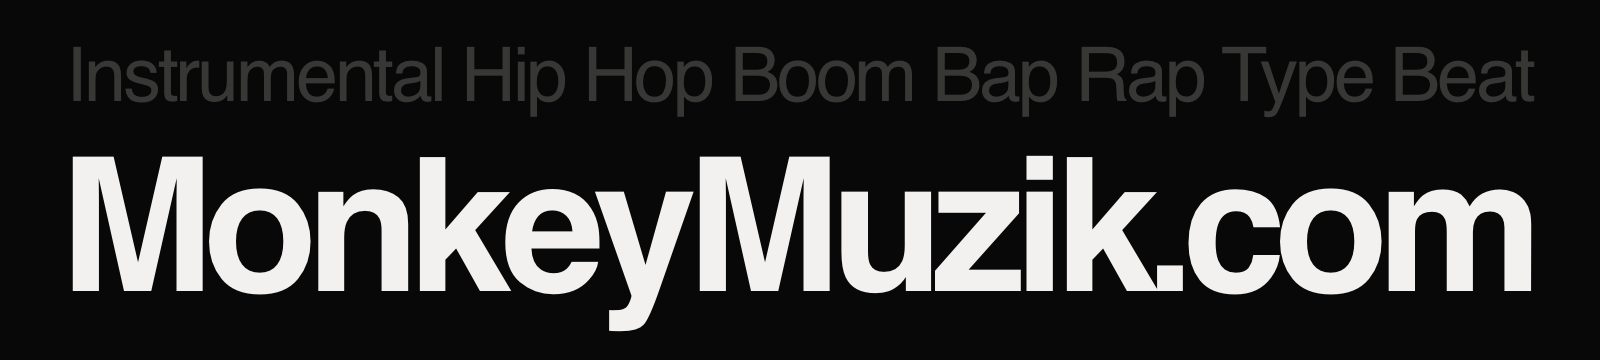 Instrumental Hip Hop Boom Bap Rap Type Beat | MonkeyMuzik.com